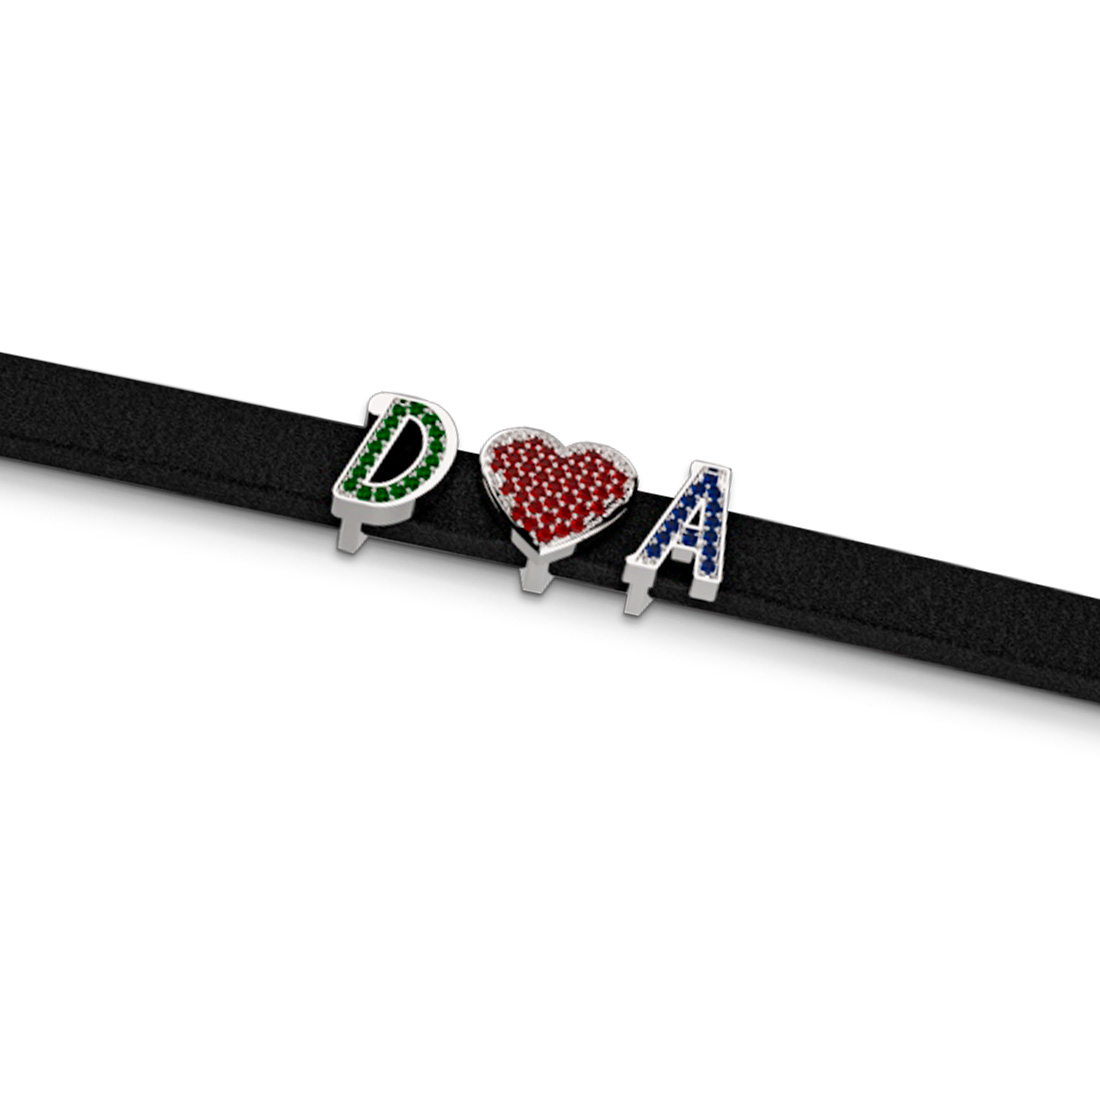 Clover Bracelet Louis Vuitton - 2 For Sale on 1stDibs  louis vuitton  clover bracelet, clover bracelet lv, lv clover bracelet